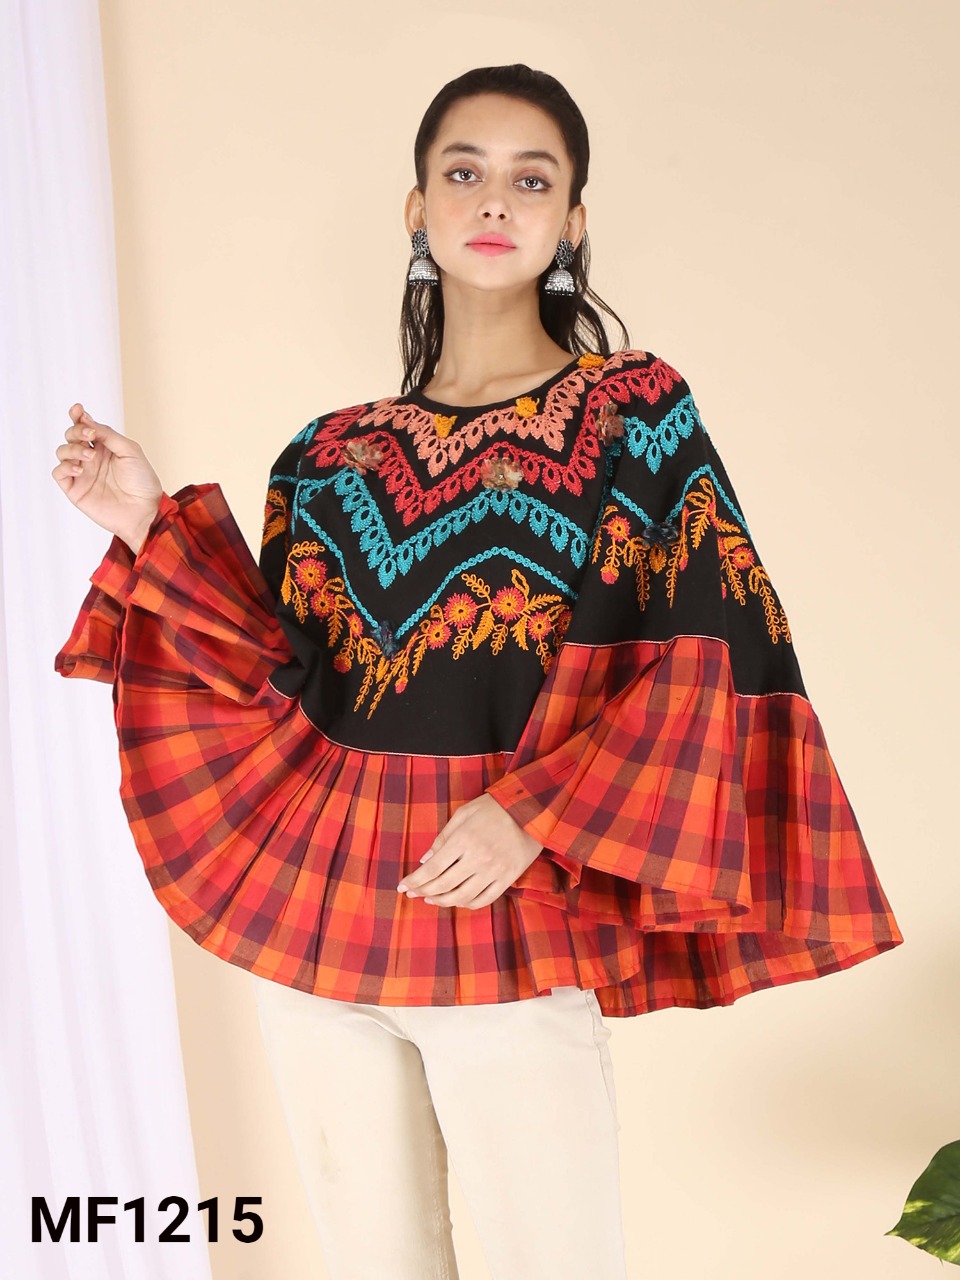 Mesmora fashion rangeela re kahdi new and modern style poncho catalog